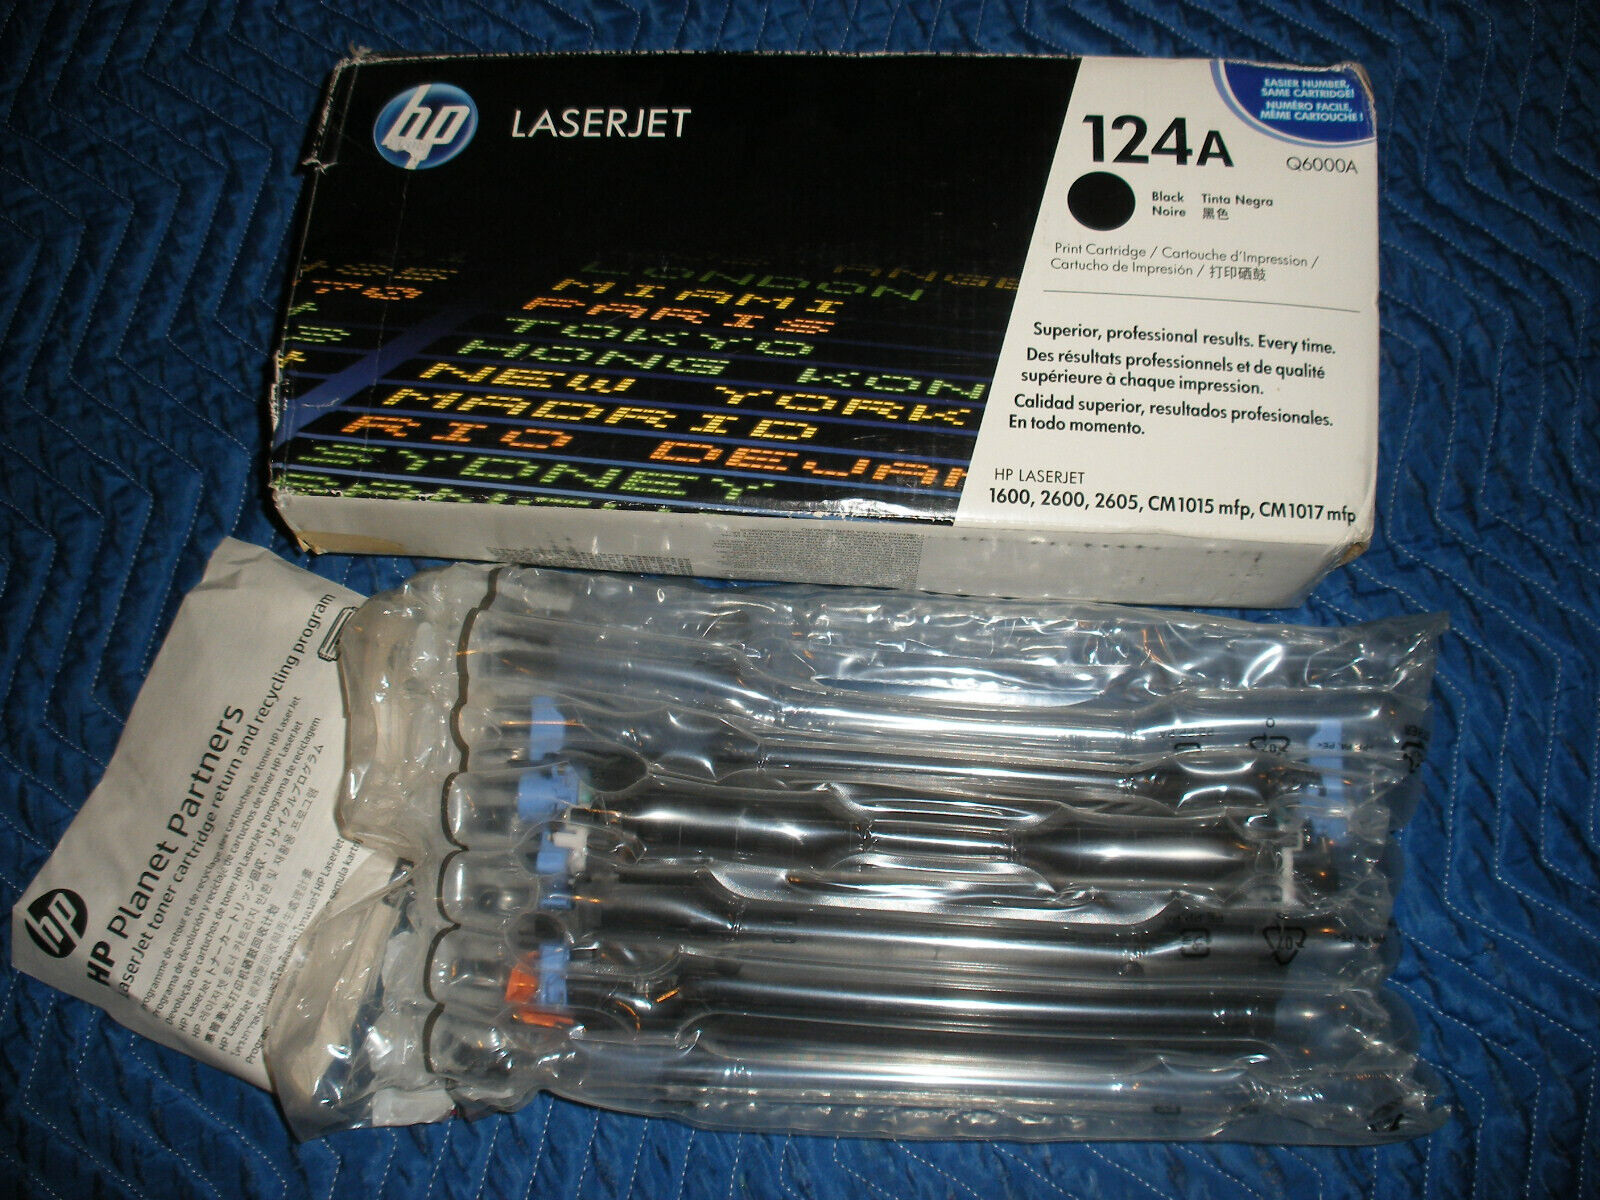 HP LASERJET OEM 124A TONER CARTRIDGE BLACK Q6000A 1600 2600 2605 - 2017 DATE NOS